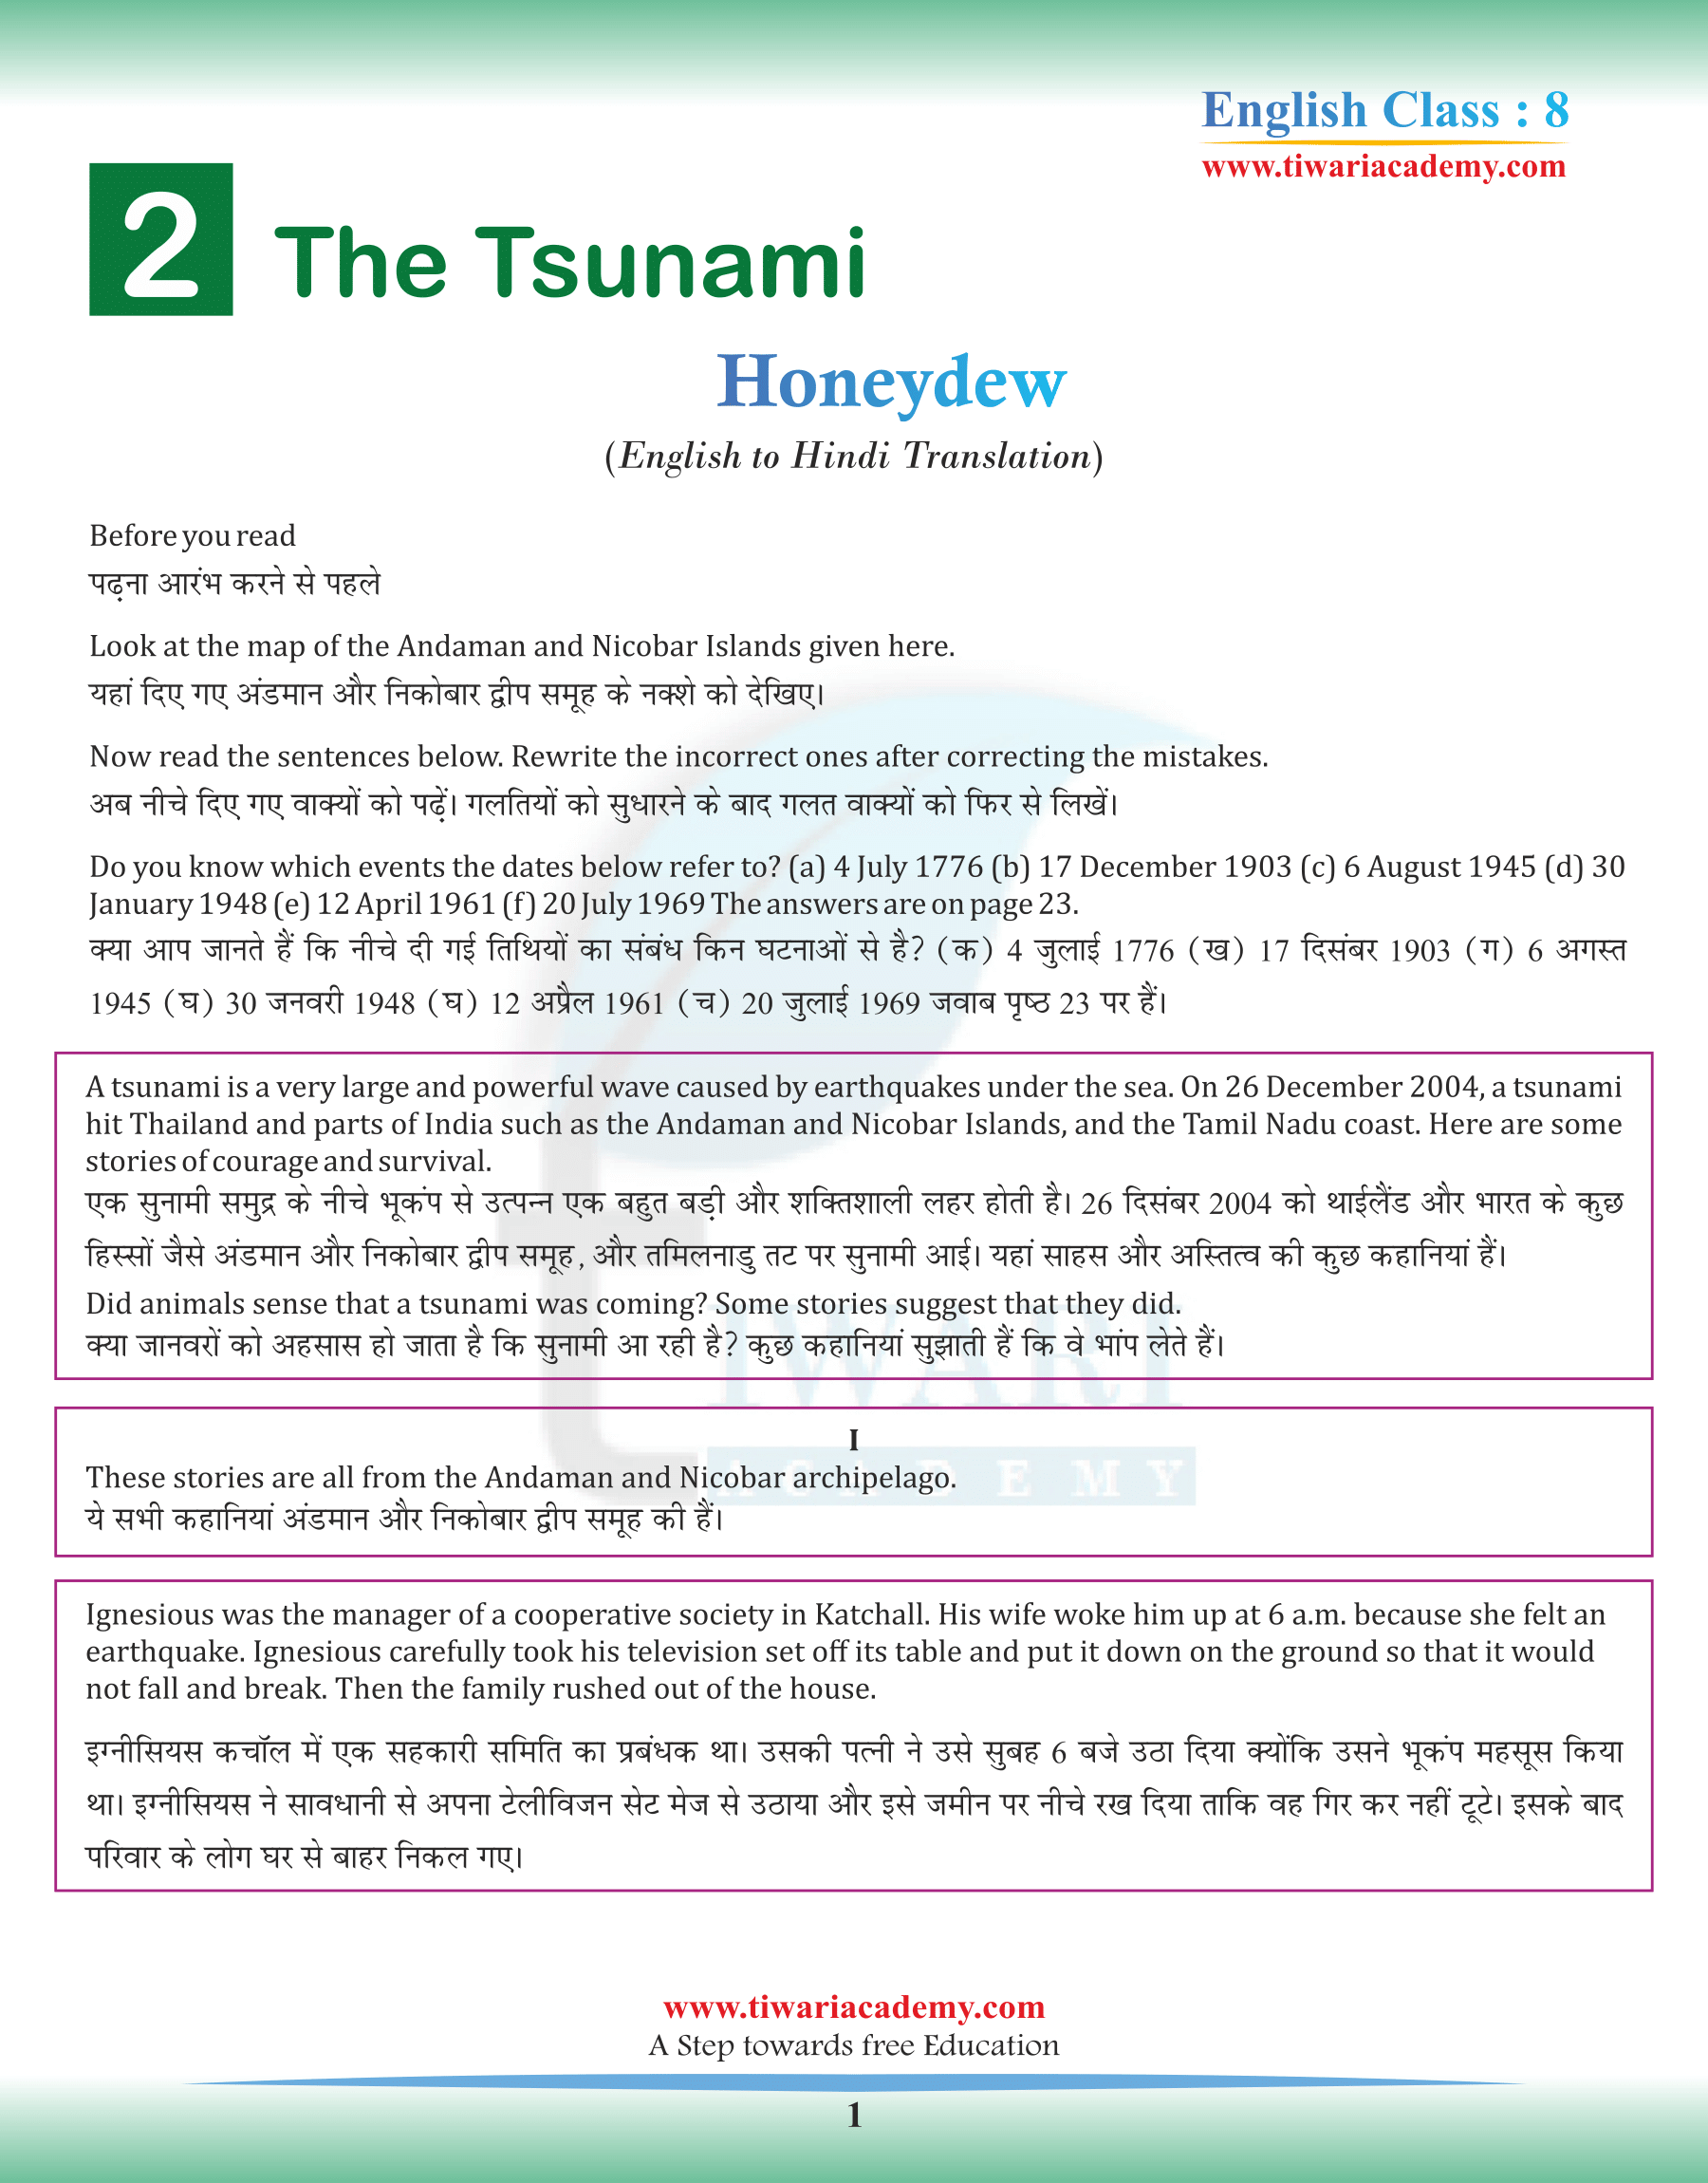 Class 8 English Honeydew Chapter 2 The Tsunami in Hindi